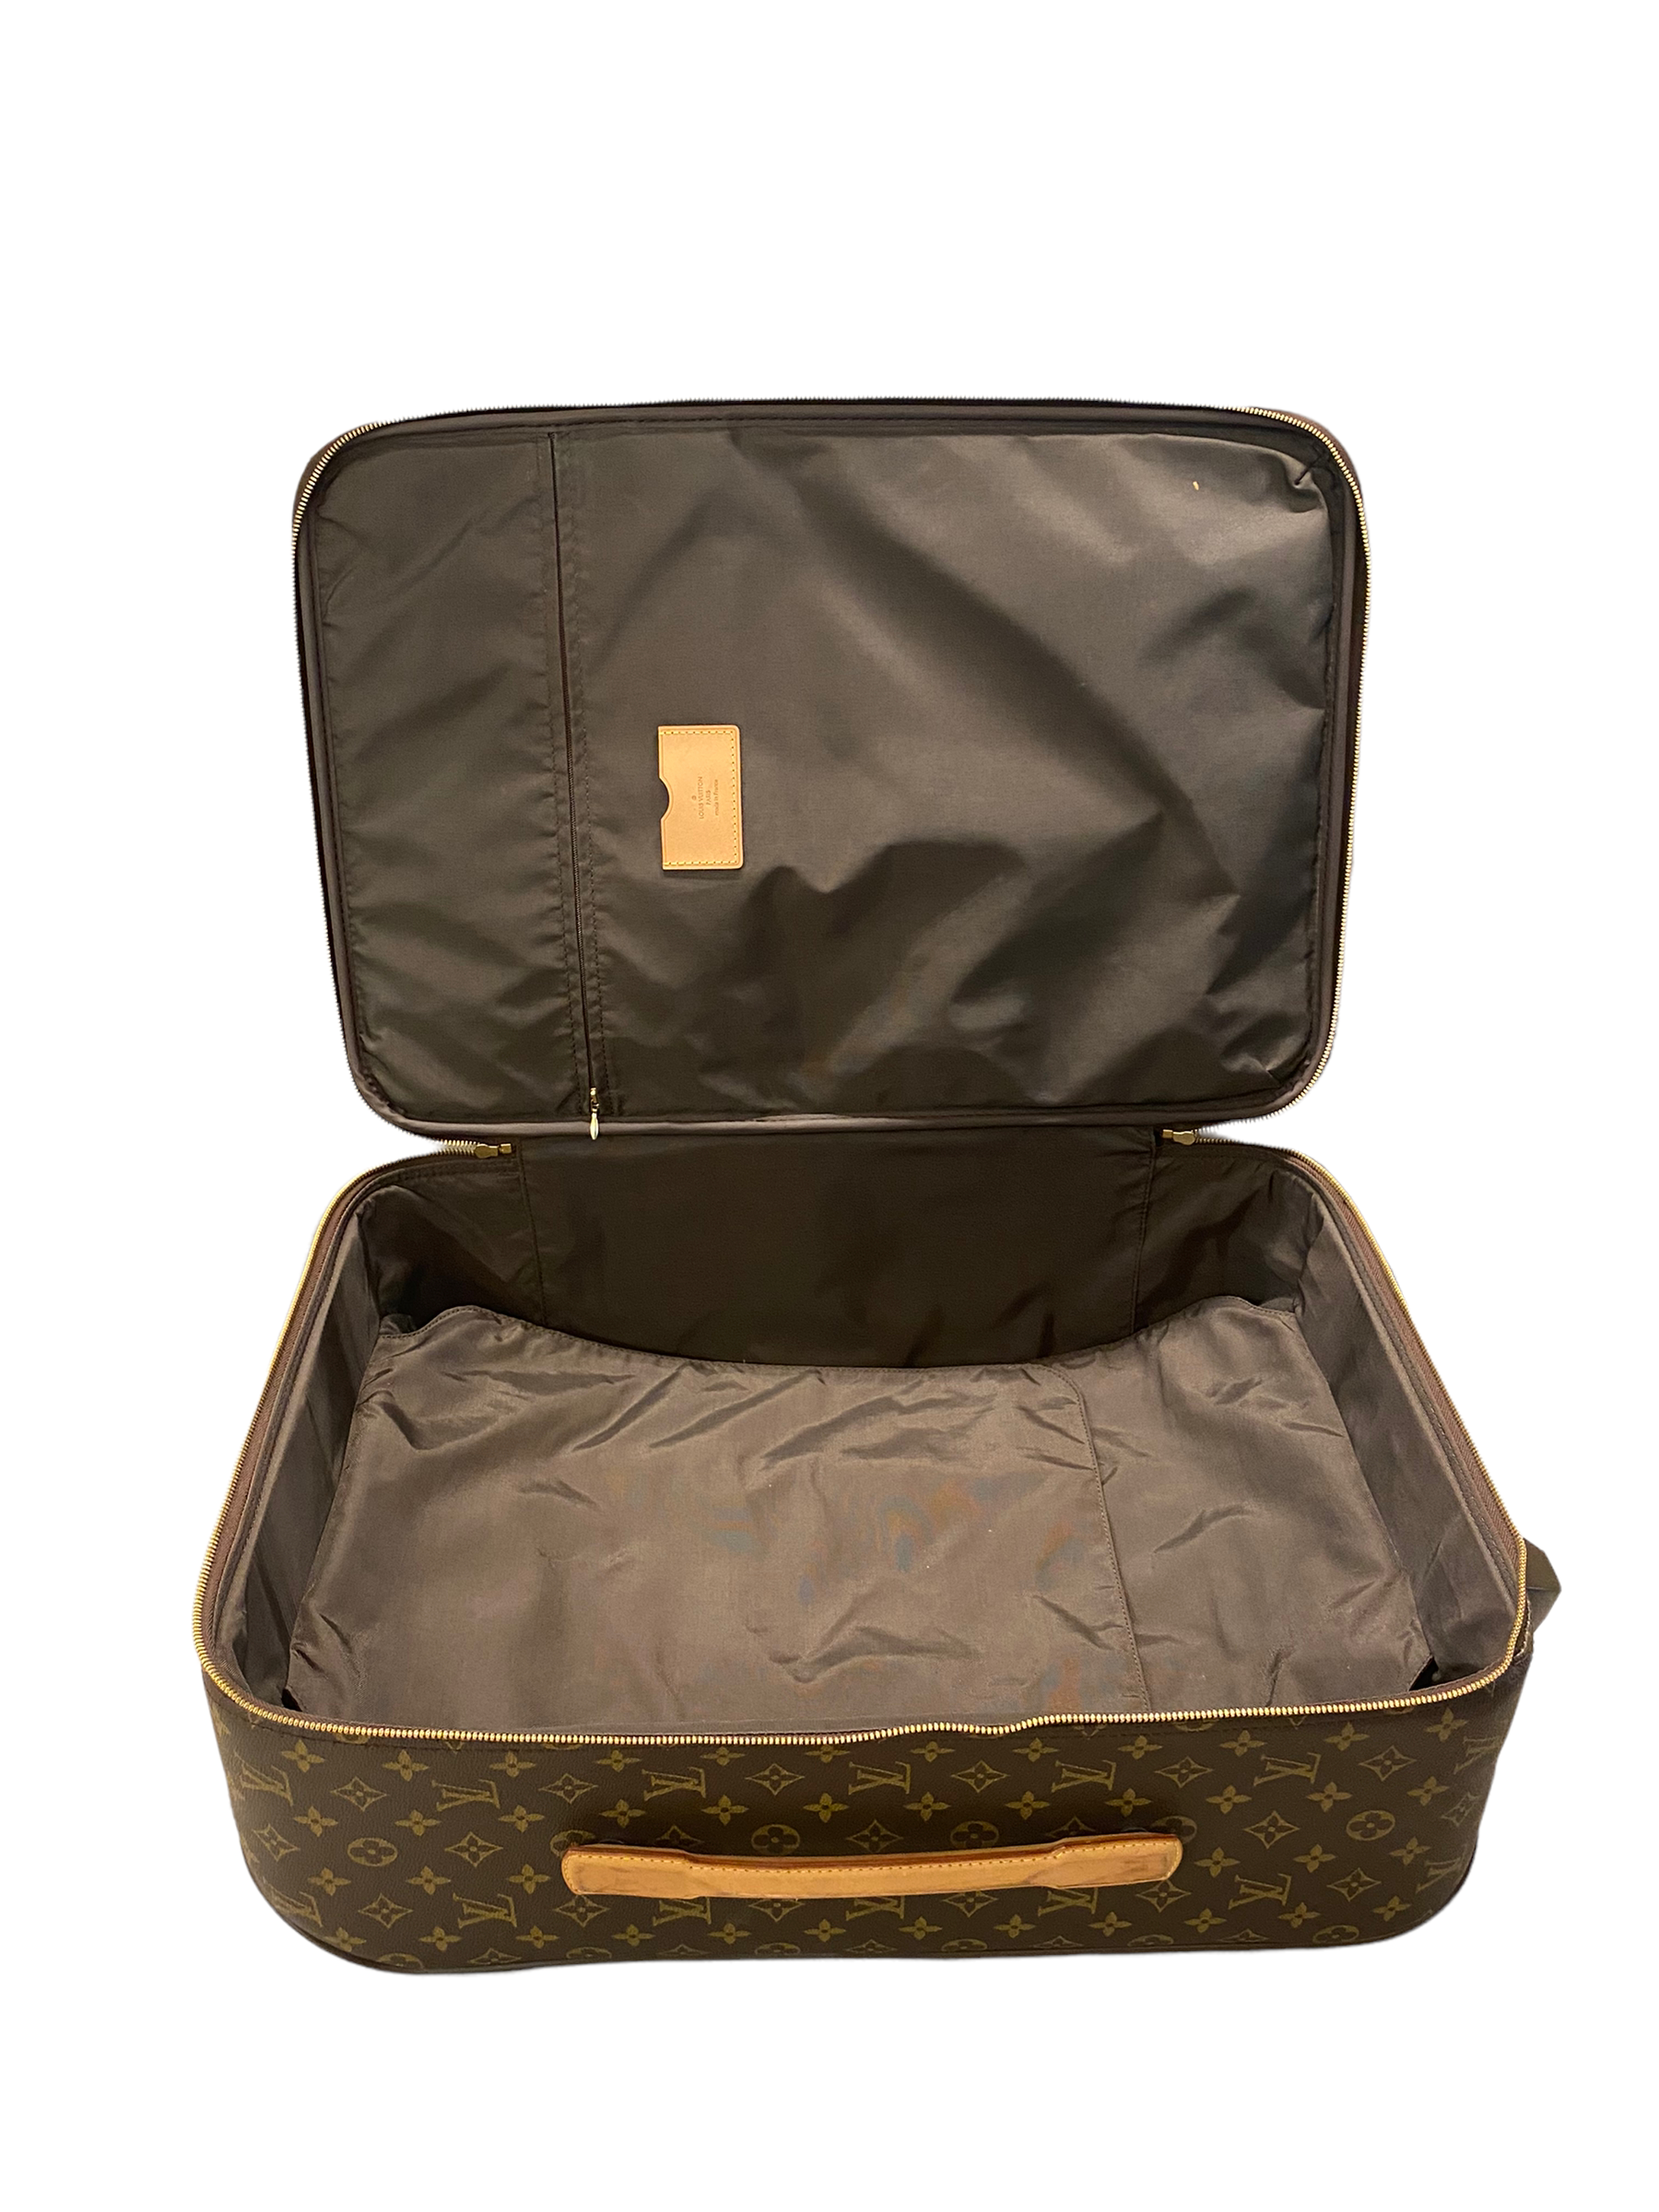 LOUIS VUITTON MONOGRAM TROLLEY – vintage stuff & luxury bags